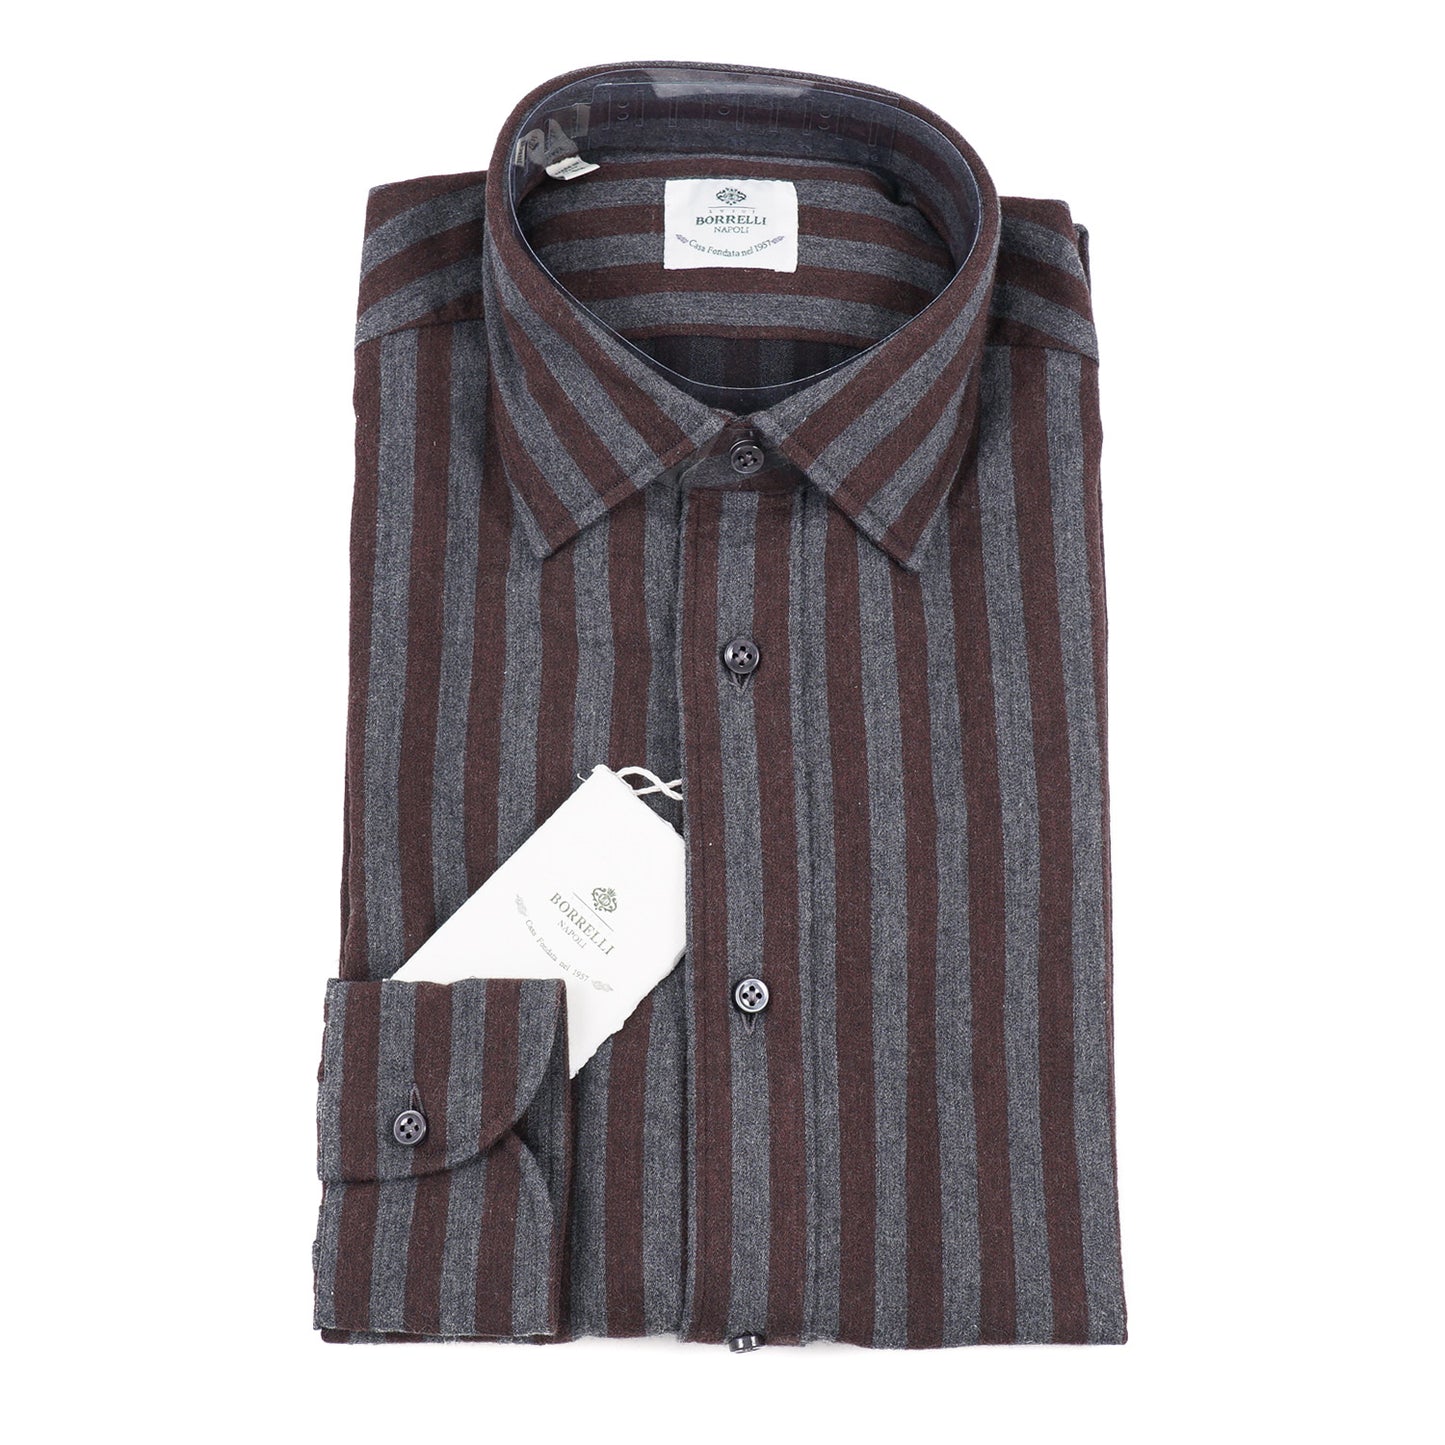 Luigi Borrelli Soft-Woven Cotton Shirt - Top Shelf Apparel